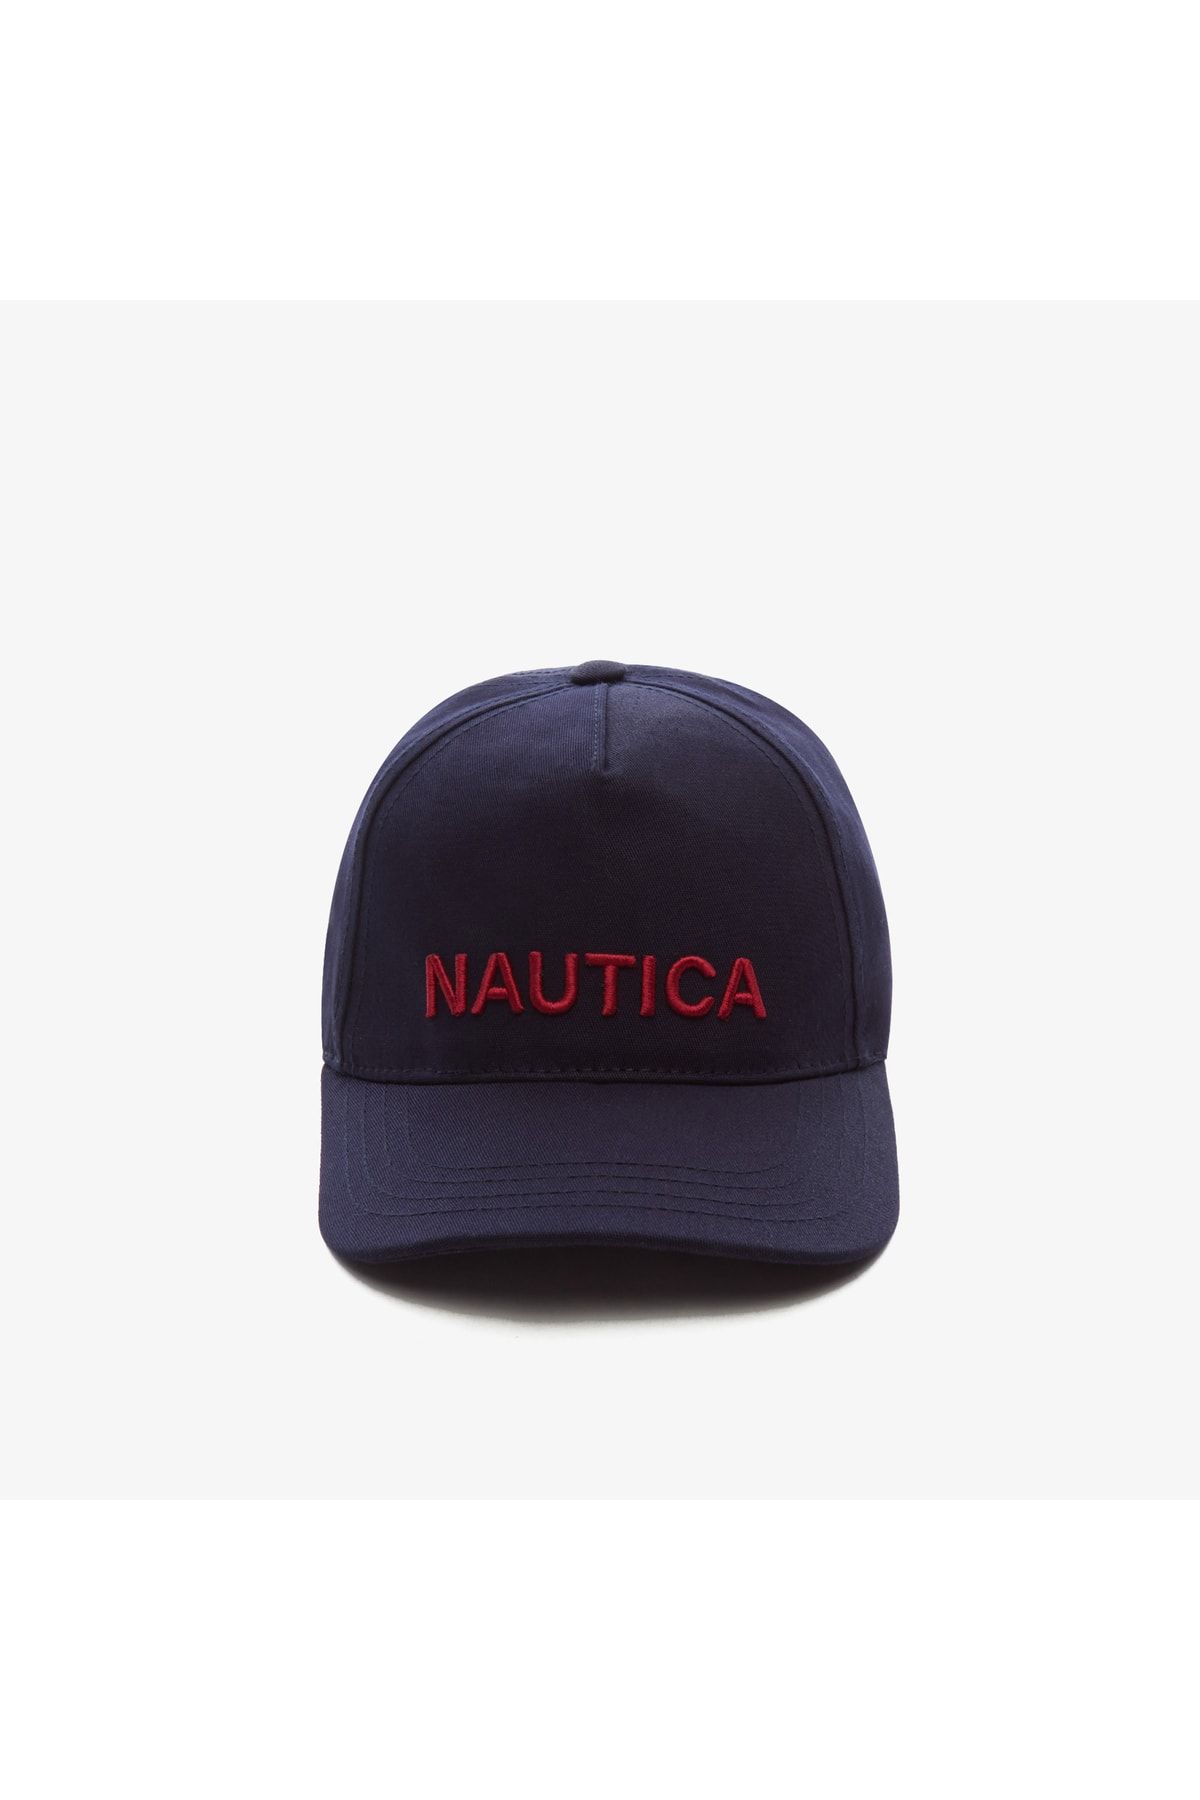 Nautica کلاه بچه آبی Nauca Navy